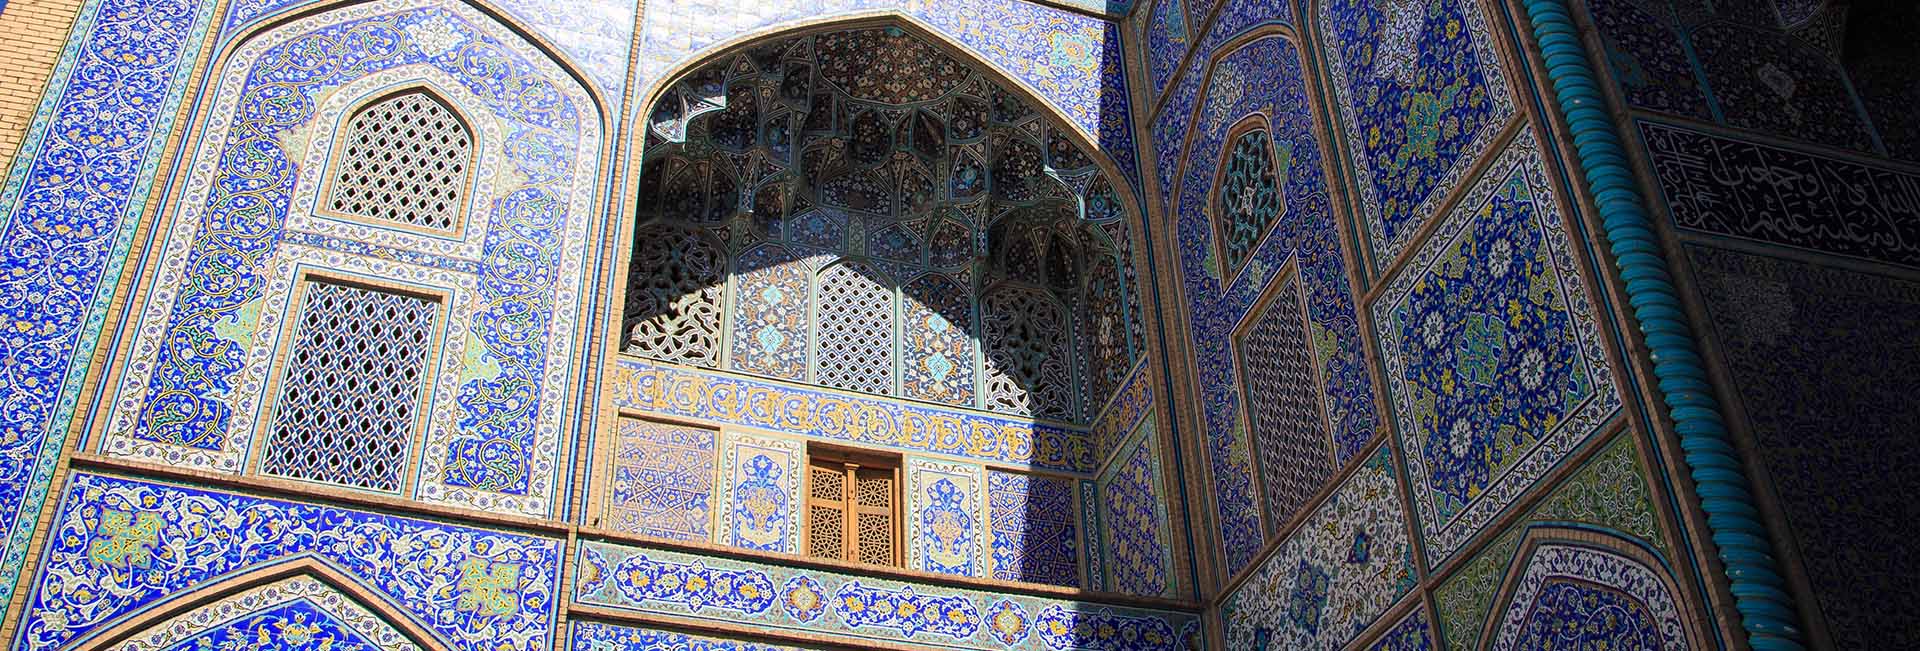 Tilework in Isfahan, Iran. Photo credit: Lindsay Fincher